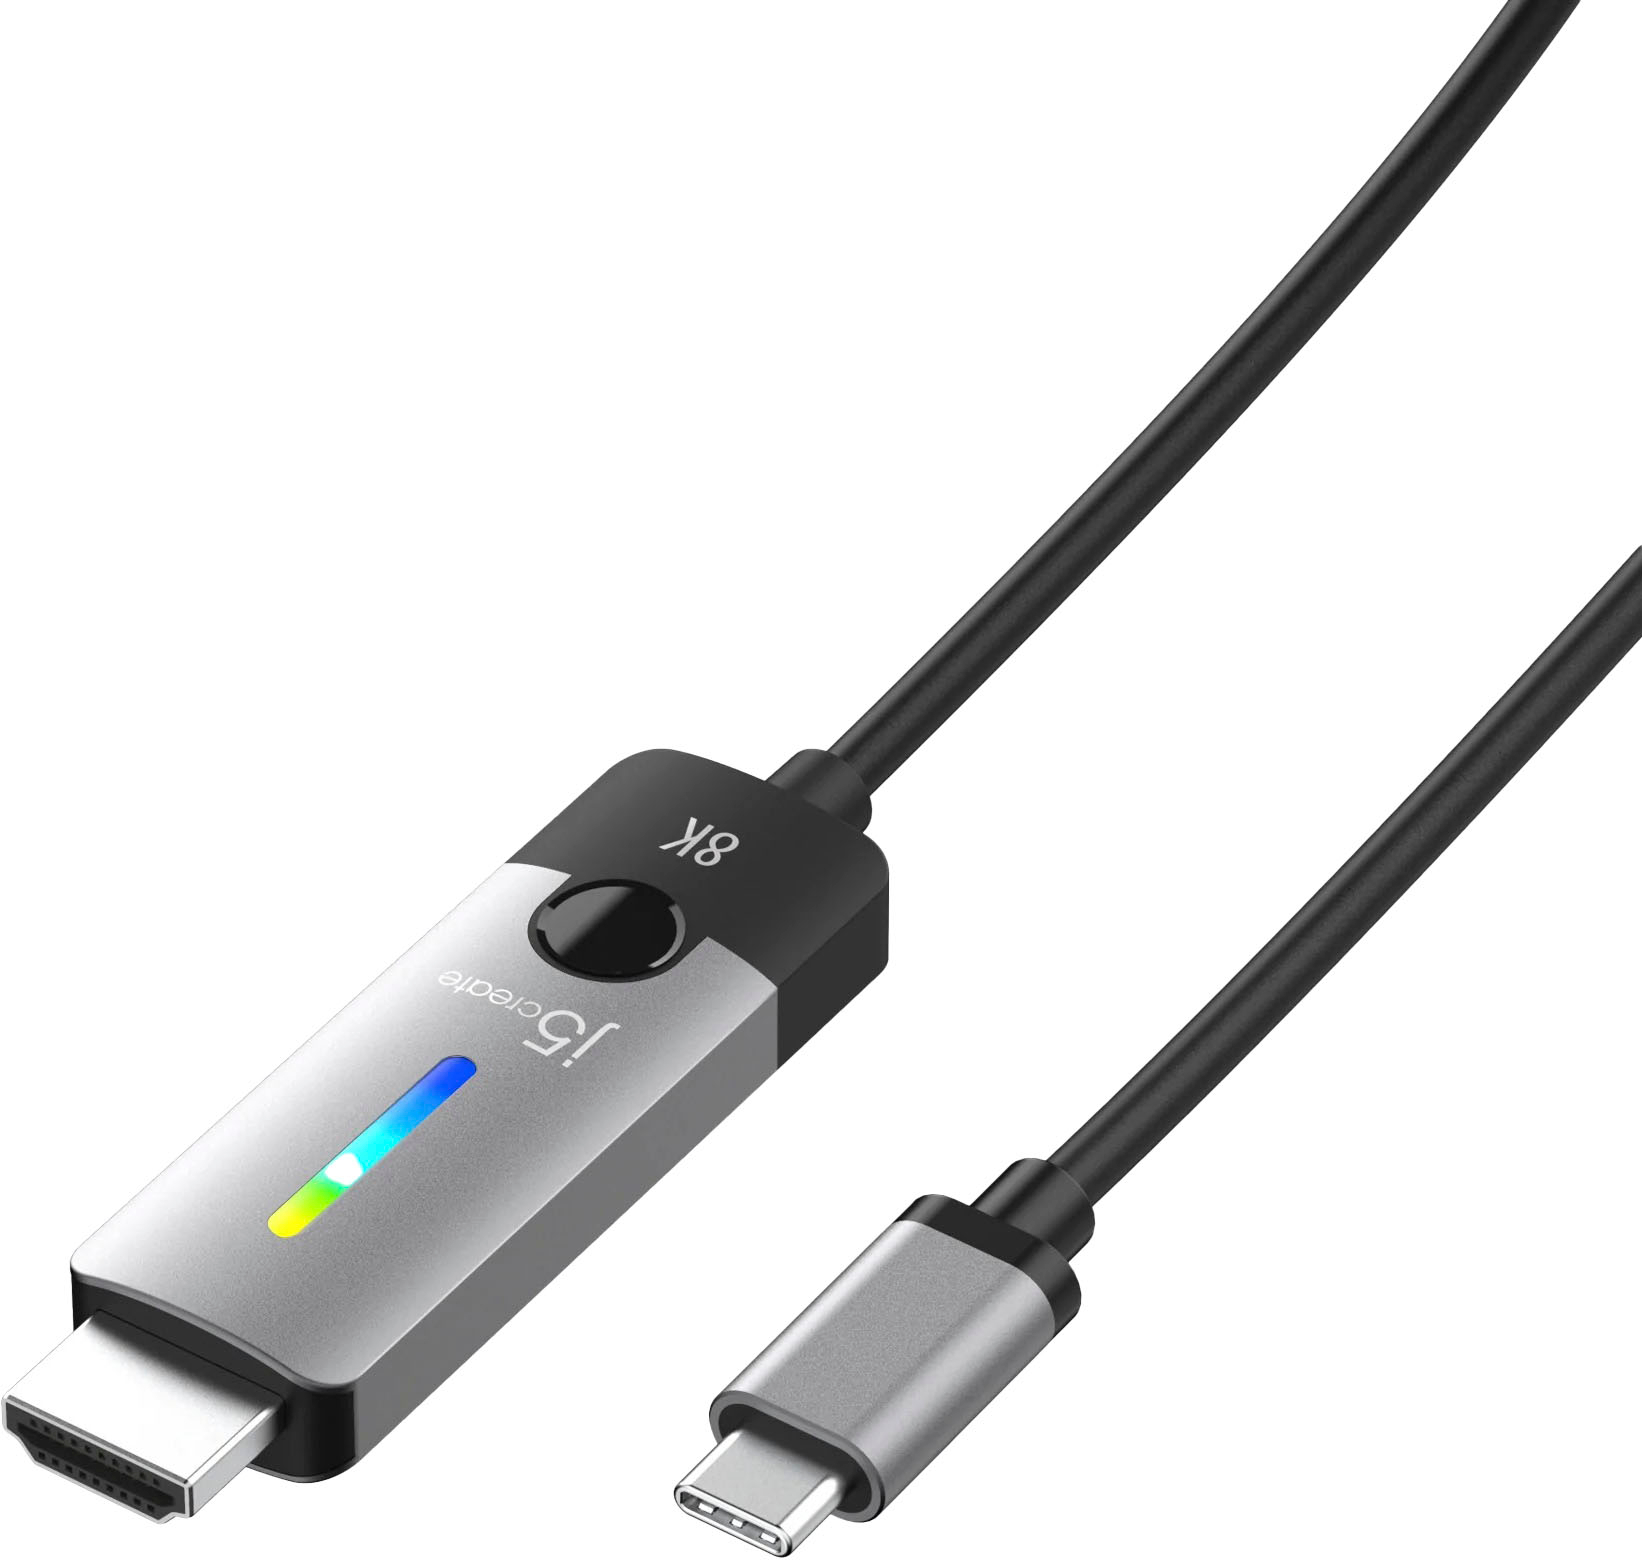 j5create USB-C to HDMI 2.1 8K Space Grey/Black JCC157 - Best Buy